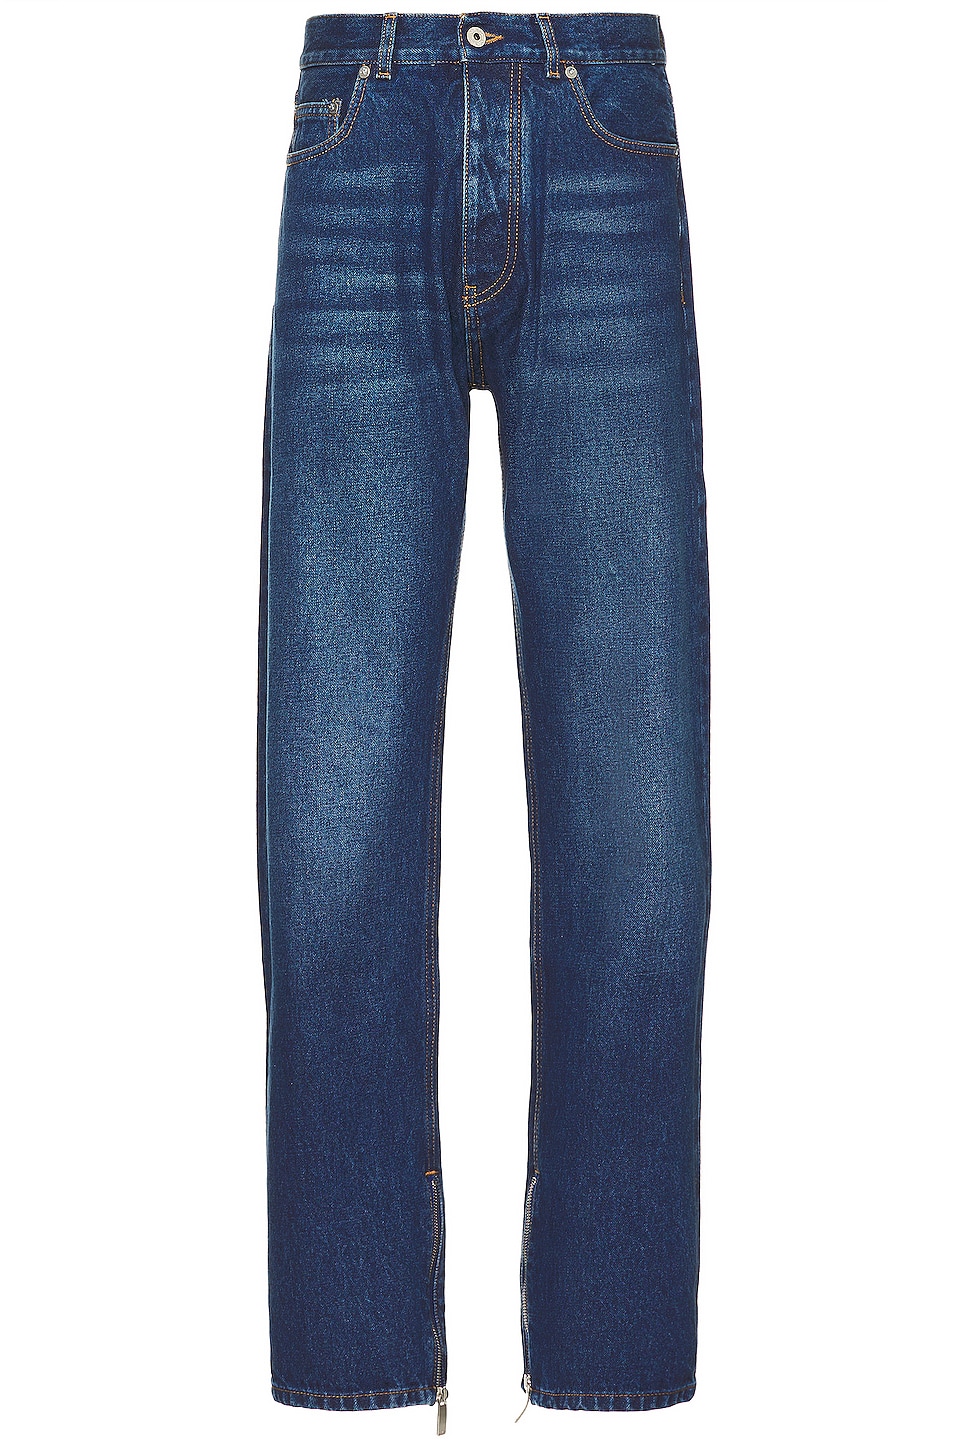 Image 1 of OFF-WHITE Zip Skate Jeans in Medium Blue